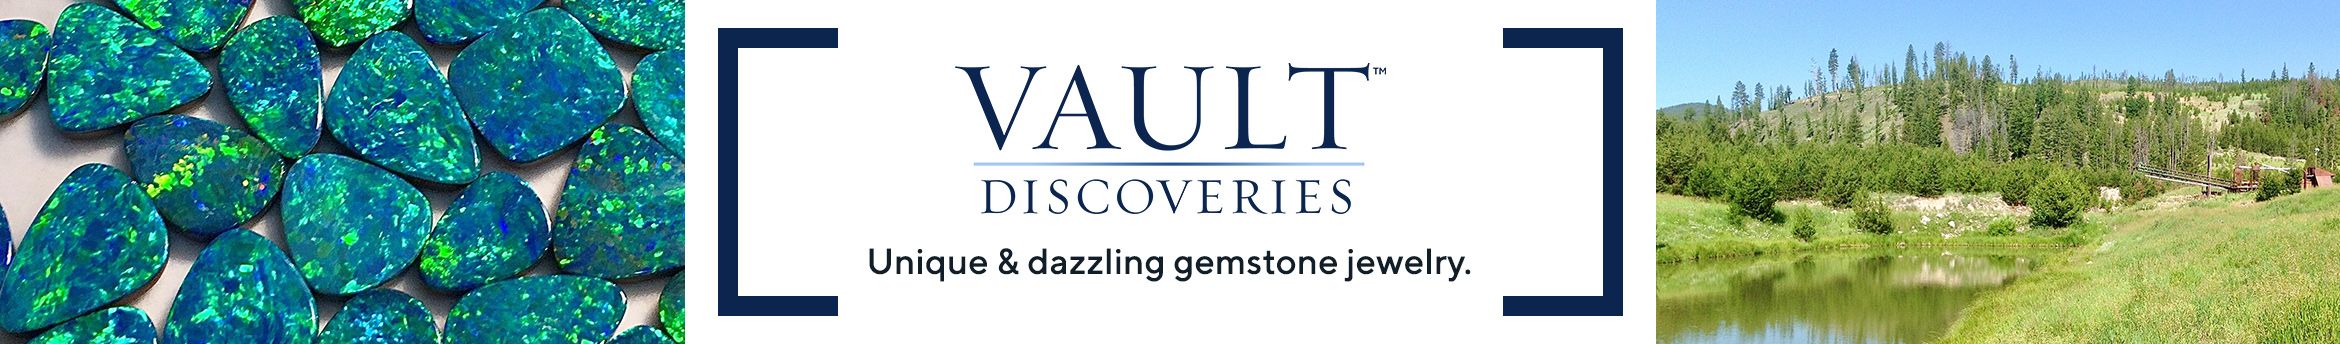 Vault Discoveries - Unique & dazzling gemstone jewelry